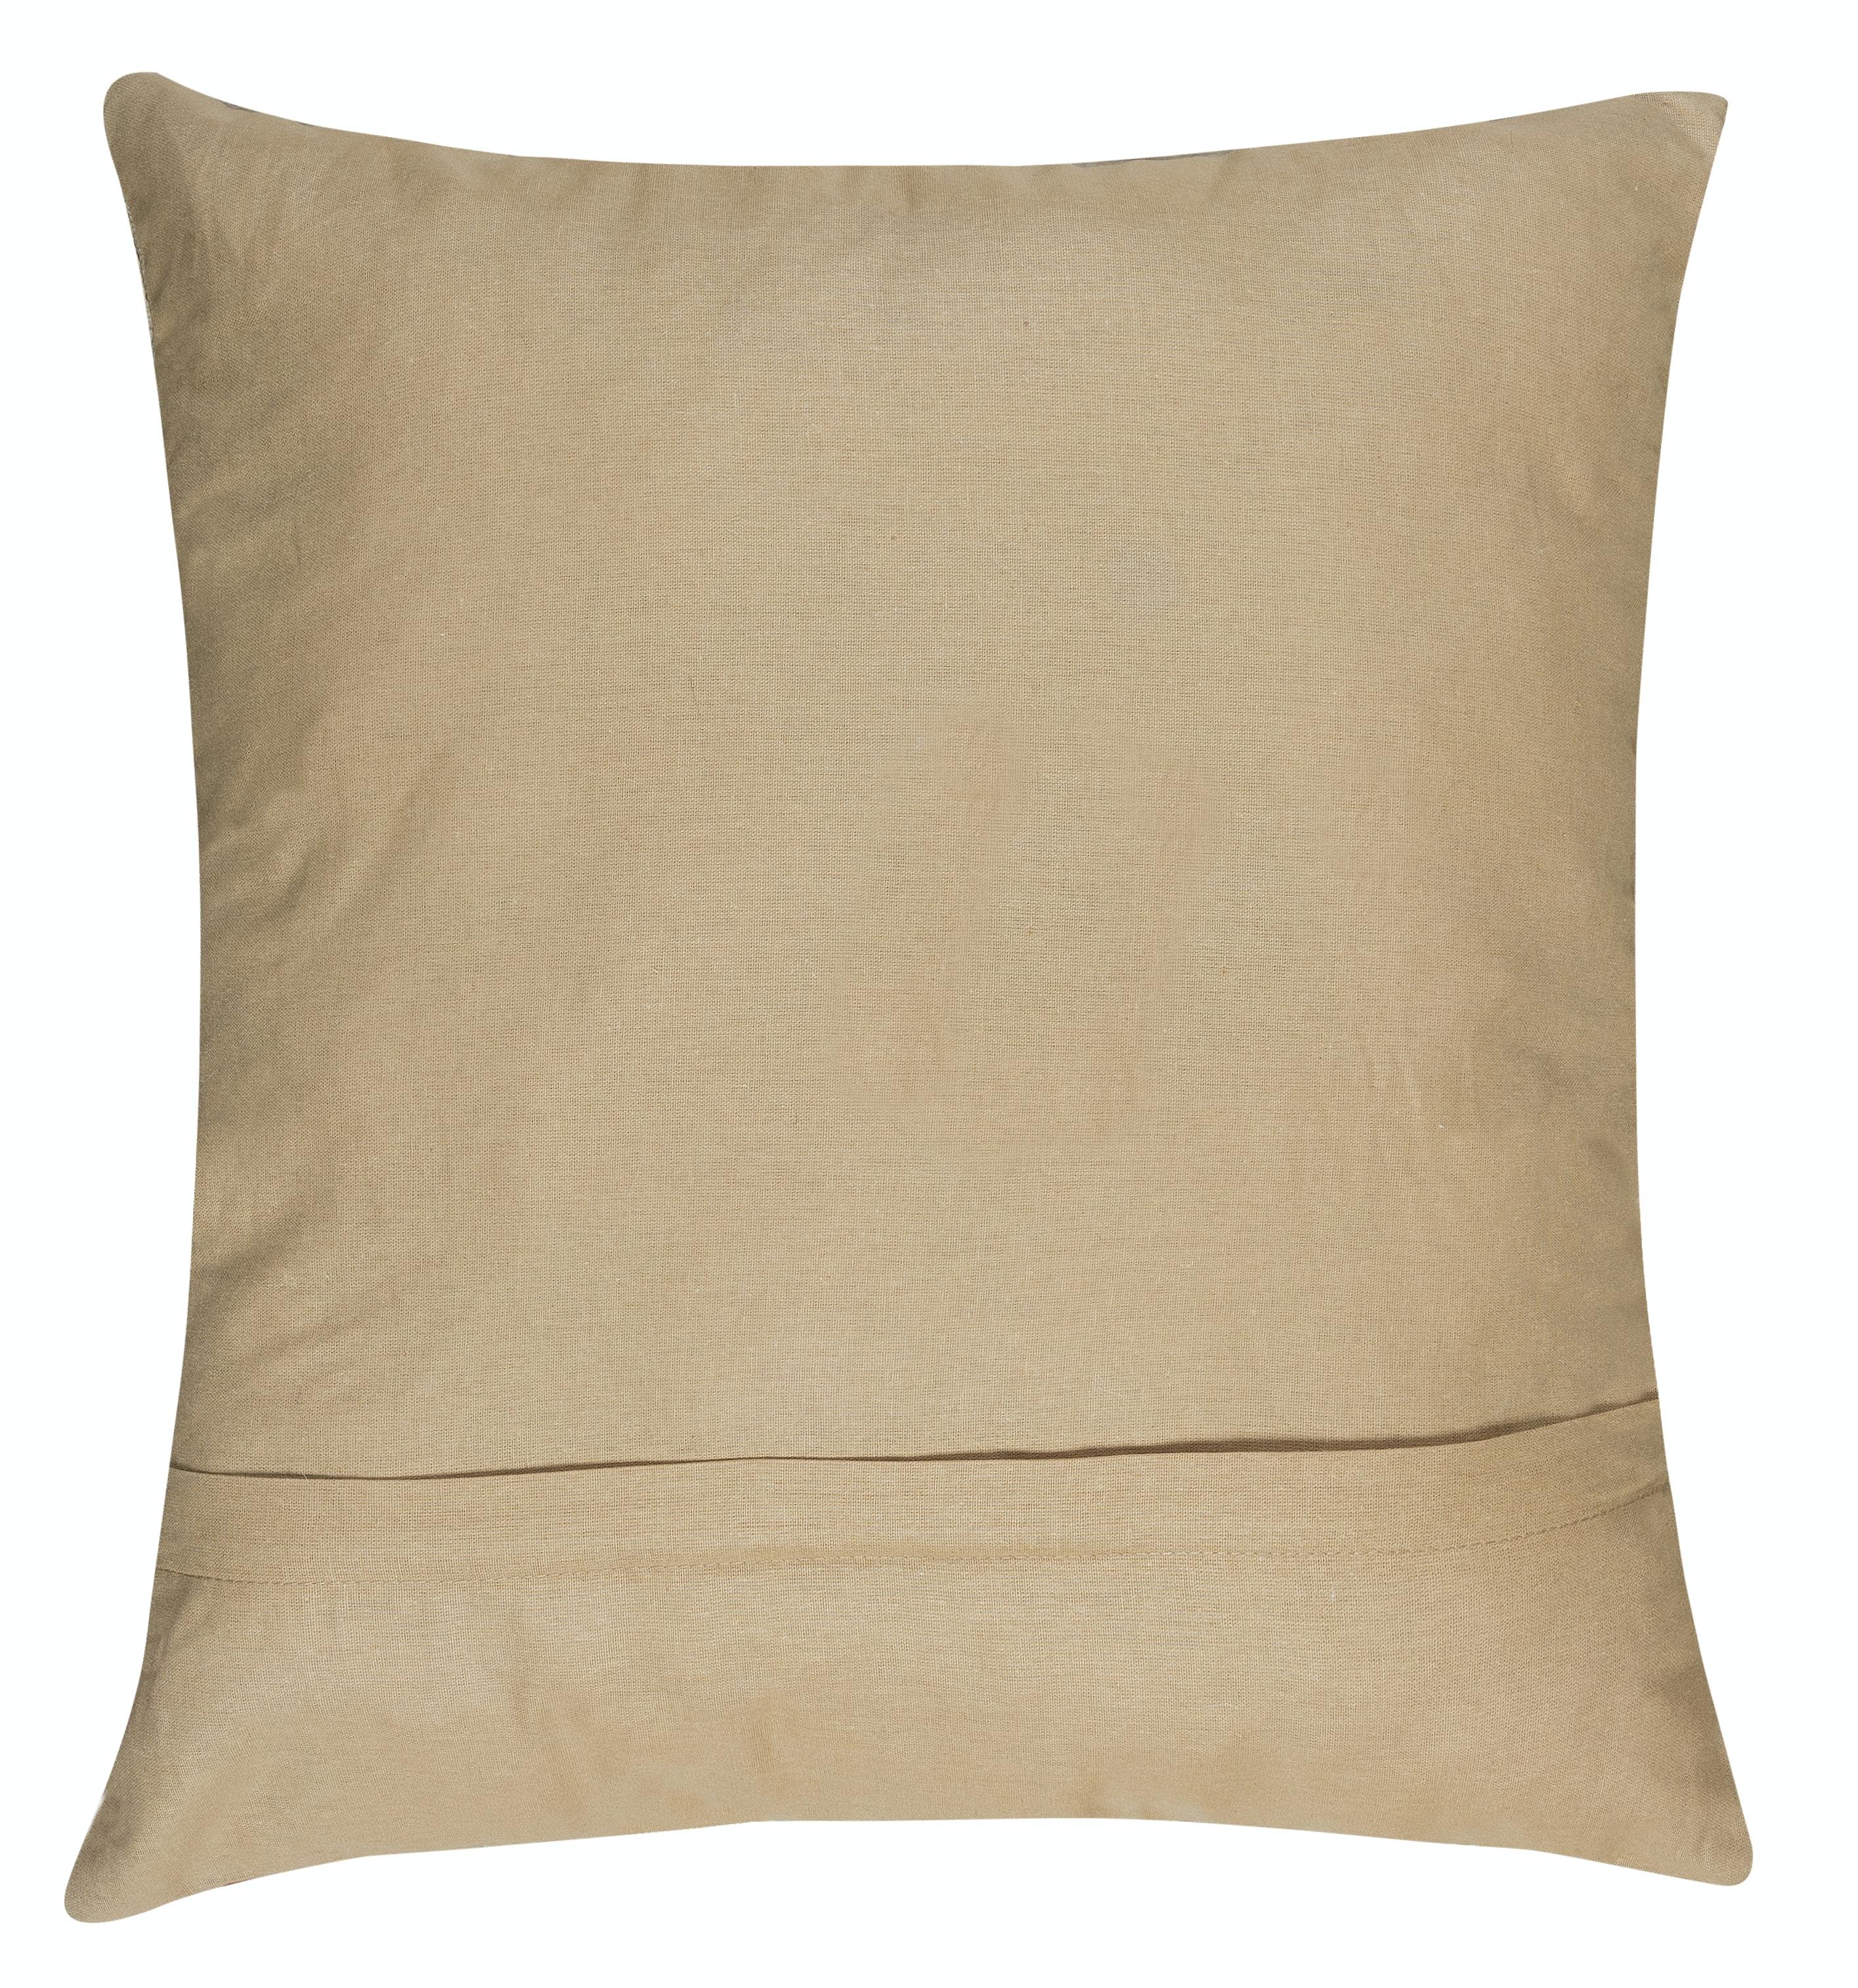 Uzbek Hand Embroidered 100% Silk Cushion Cover, Living Room Decor Throw Pillow For Sale